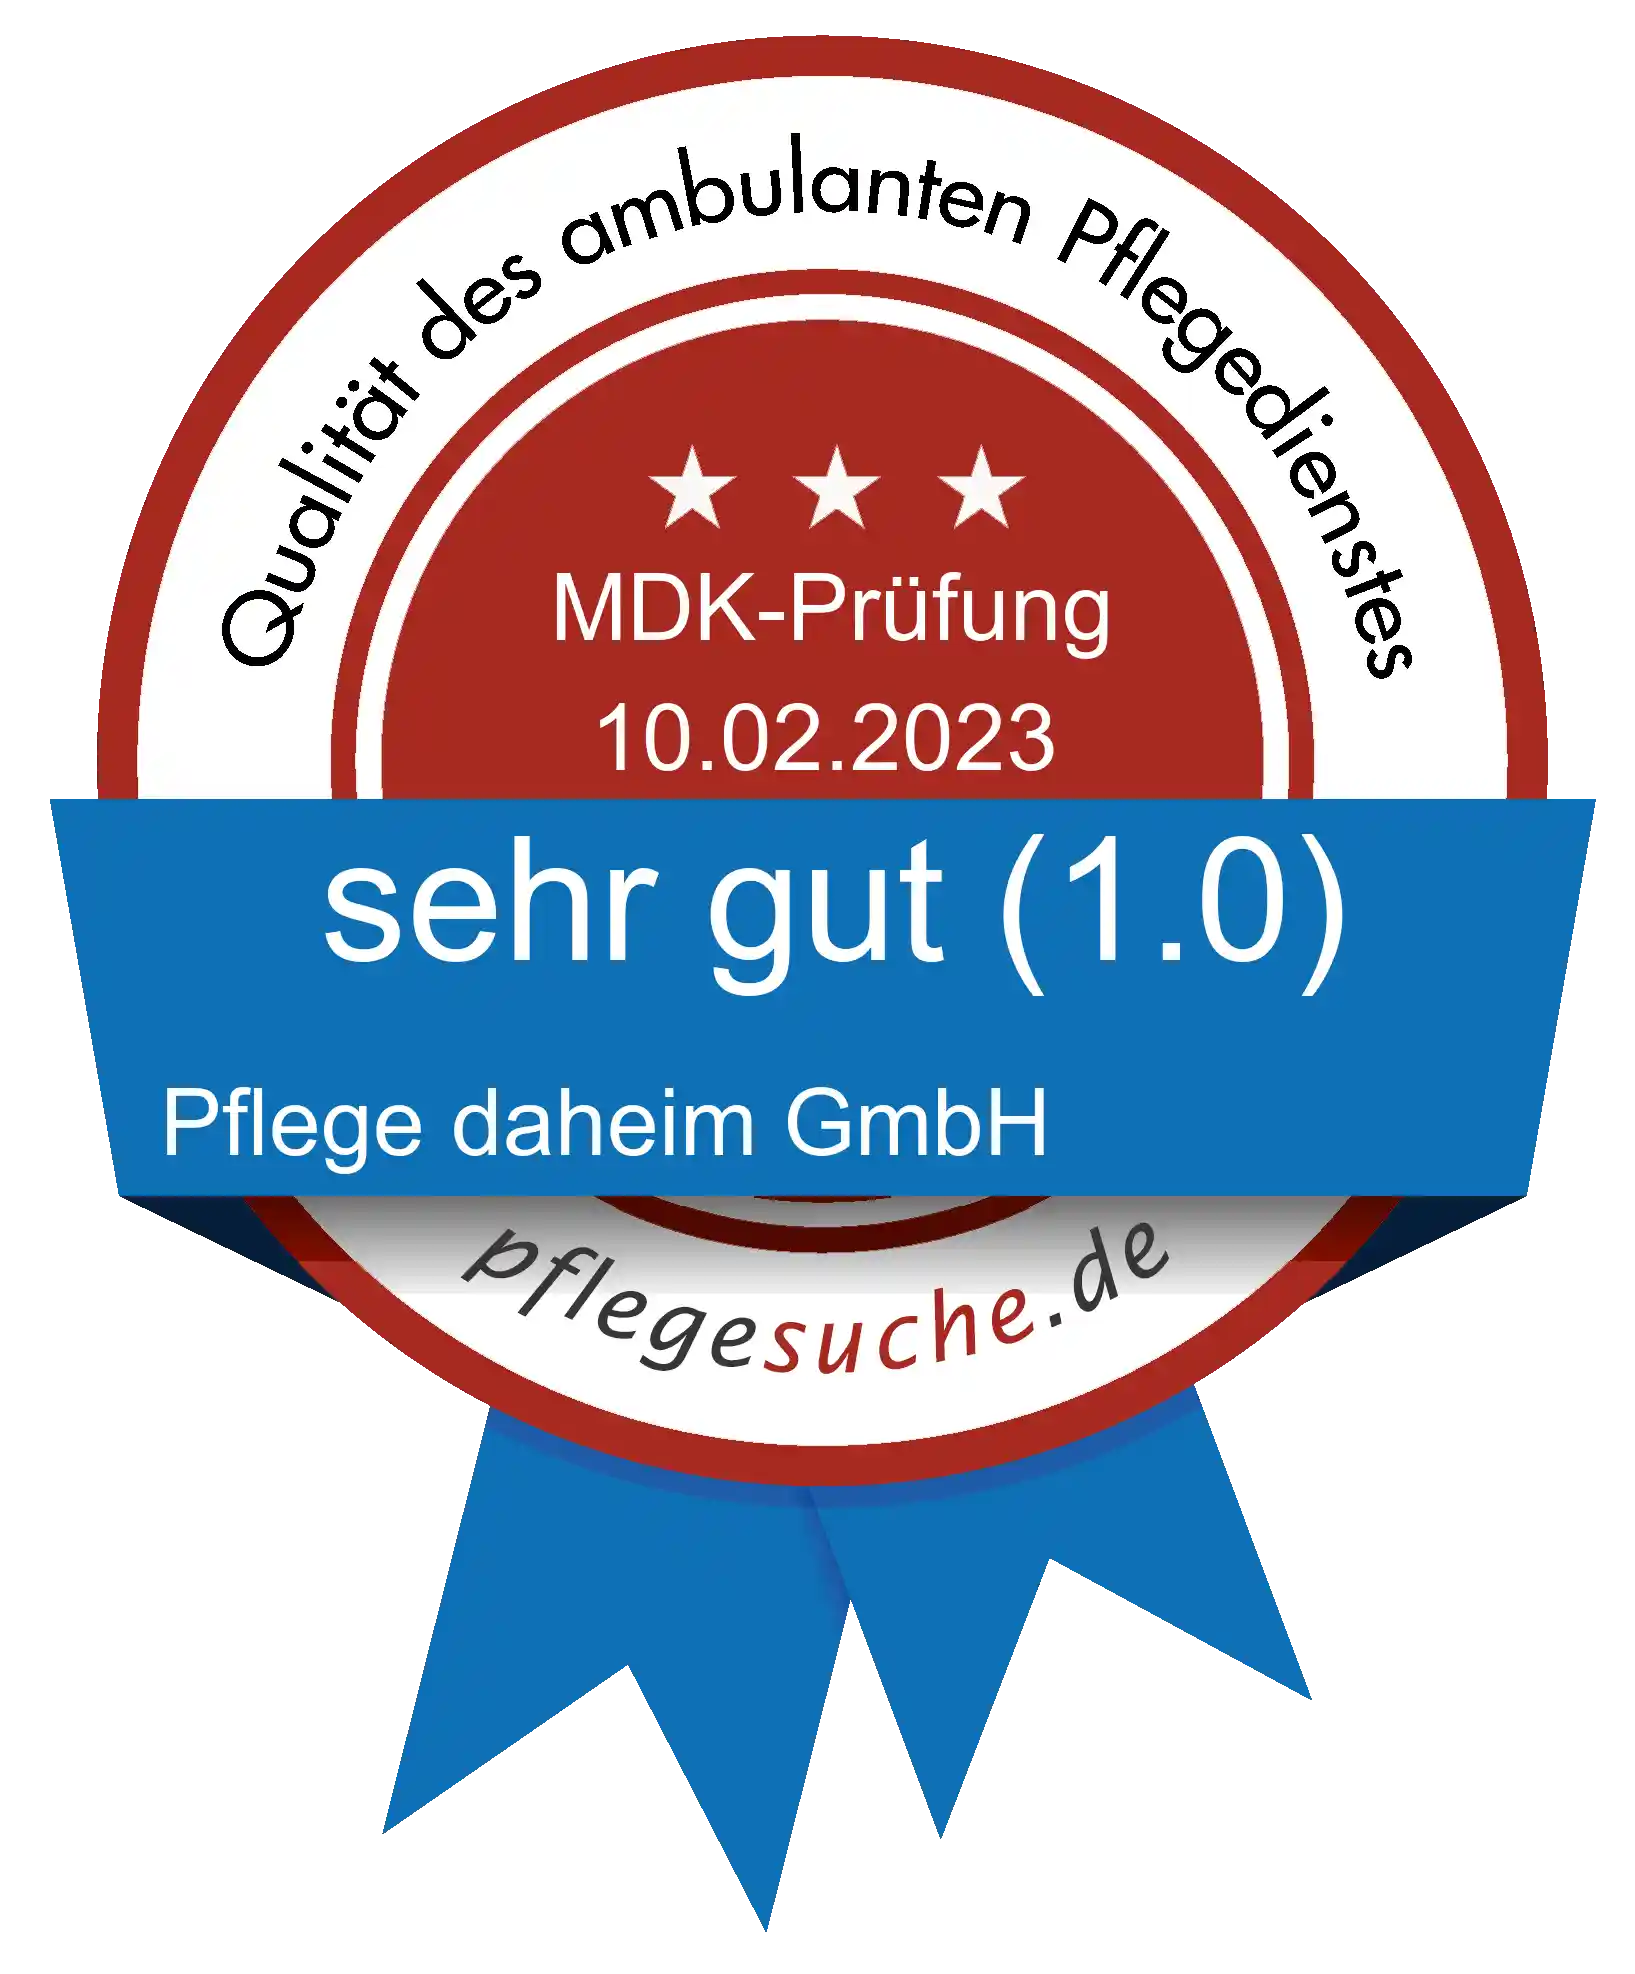 Siegel Benotung: Pflege daheim GmbH